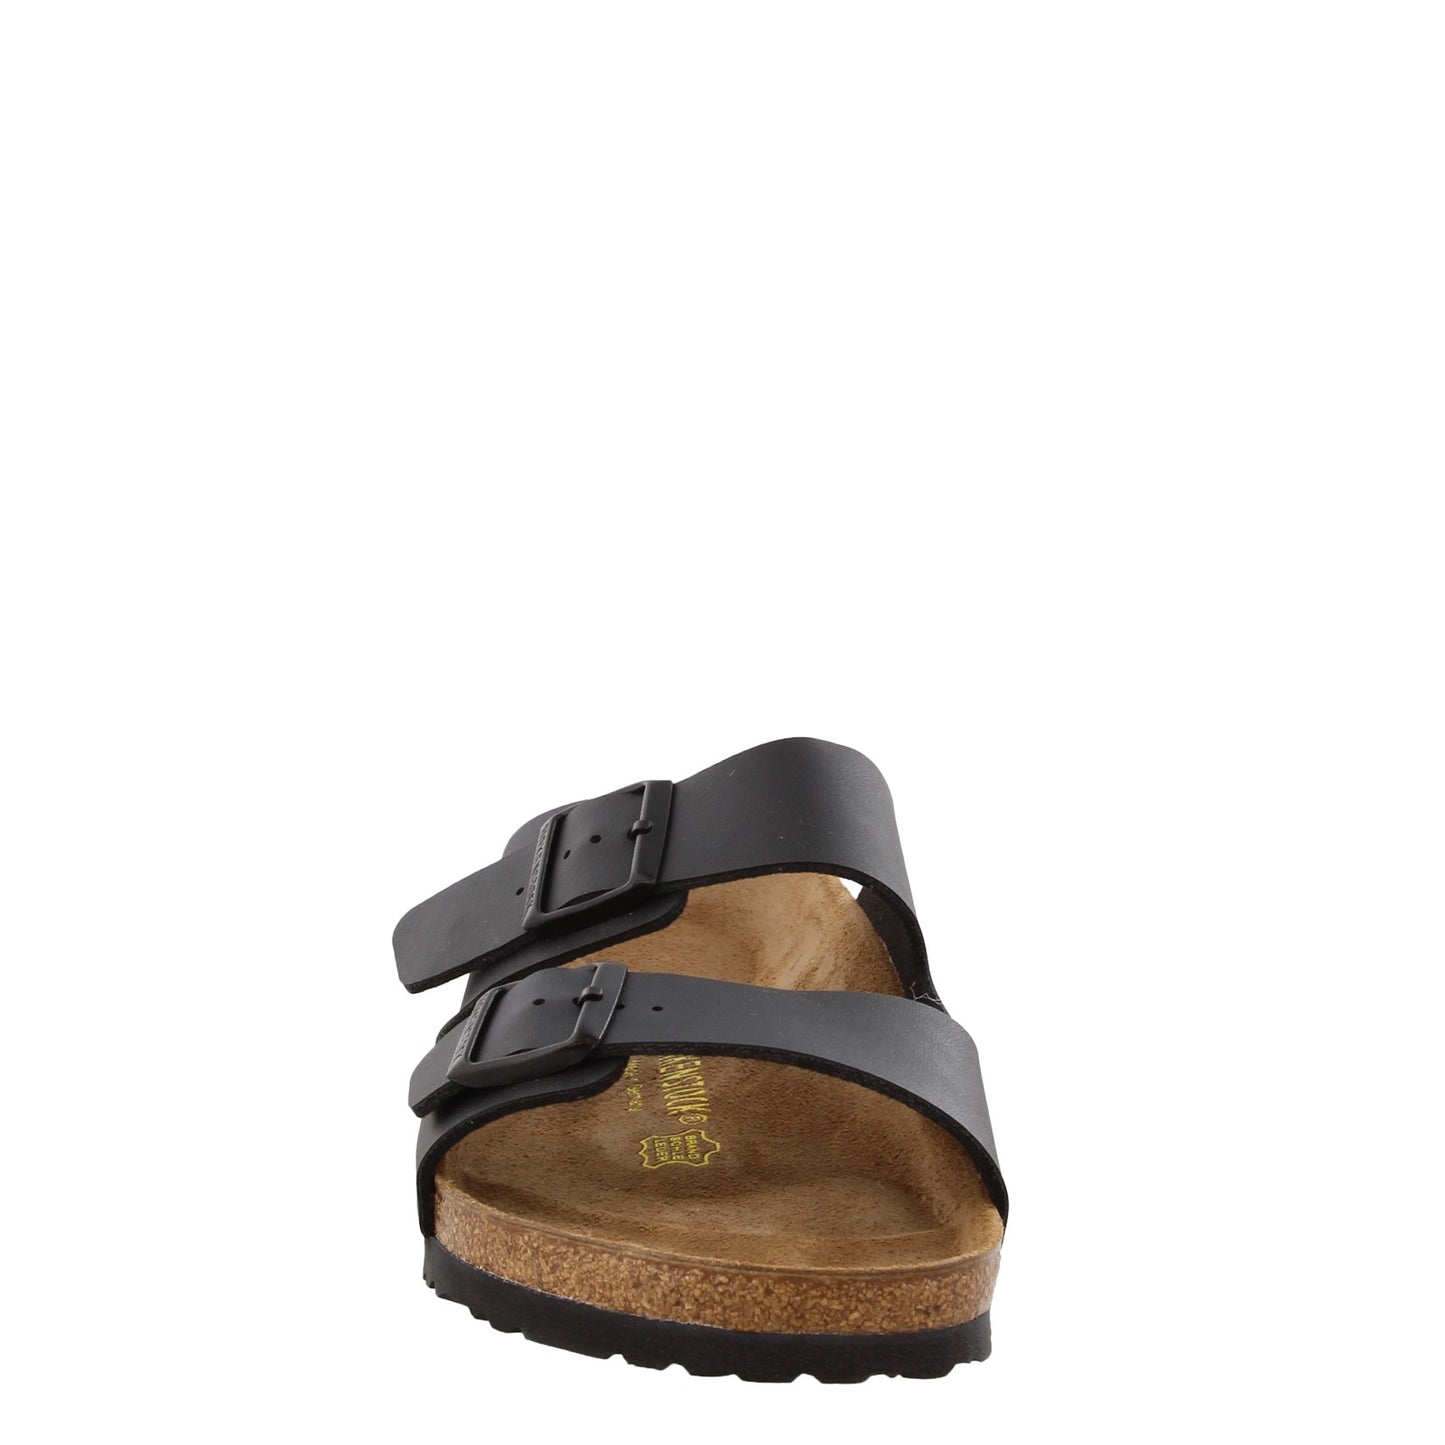 Peltz Shoes  Men's Birkenstock Arizona Birko Flor Sandal - Regular Width BLACK 5179 1 R